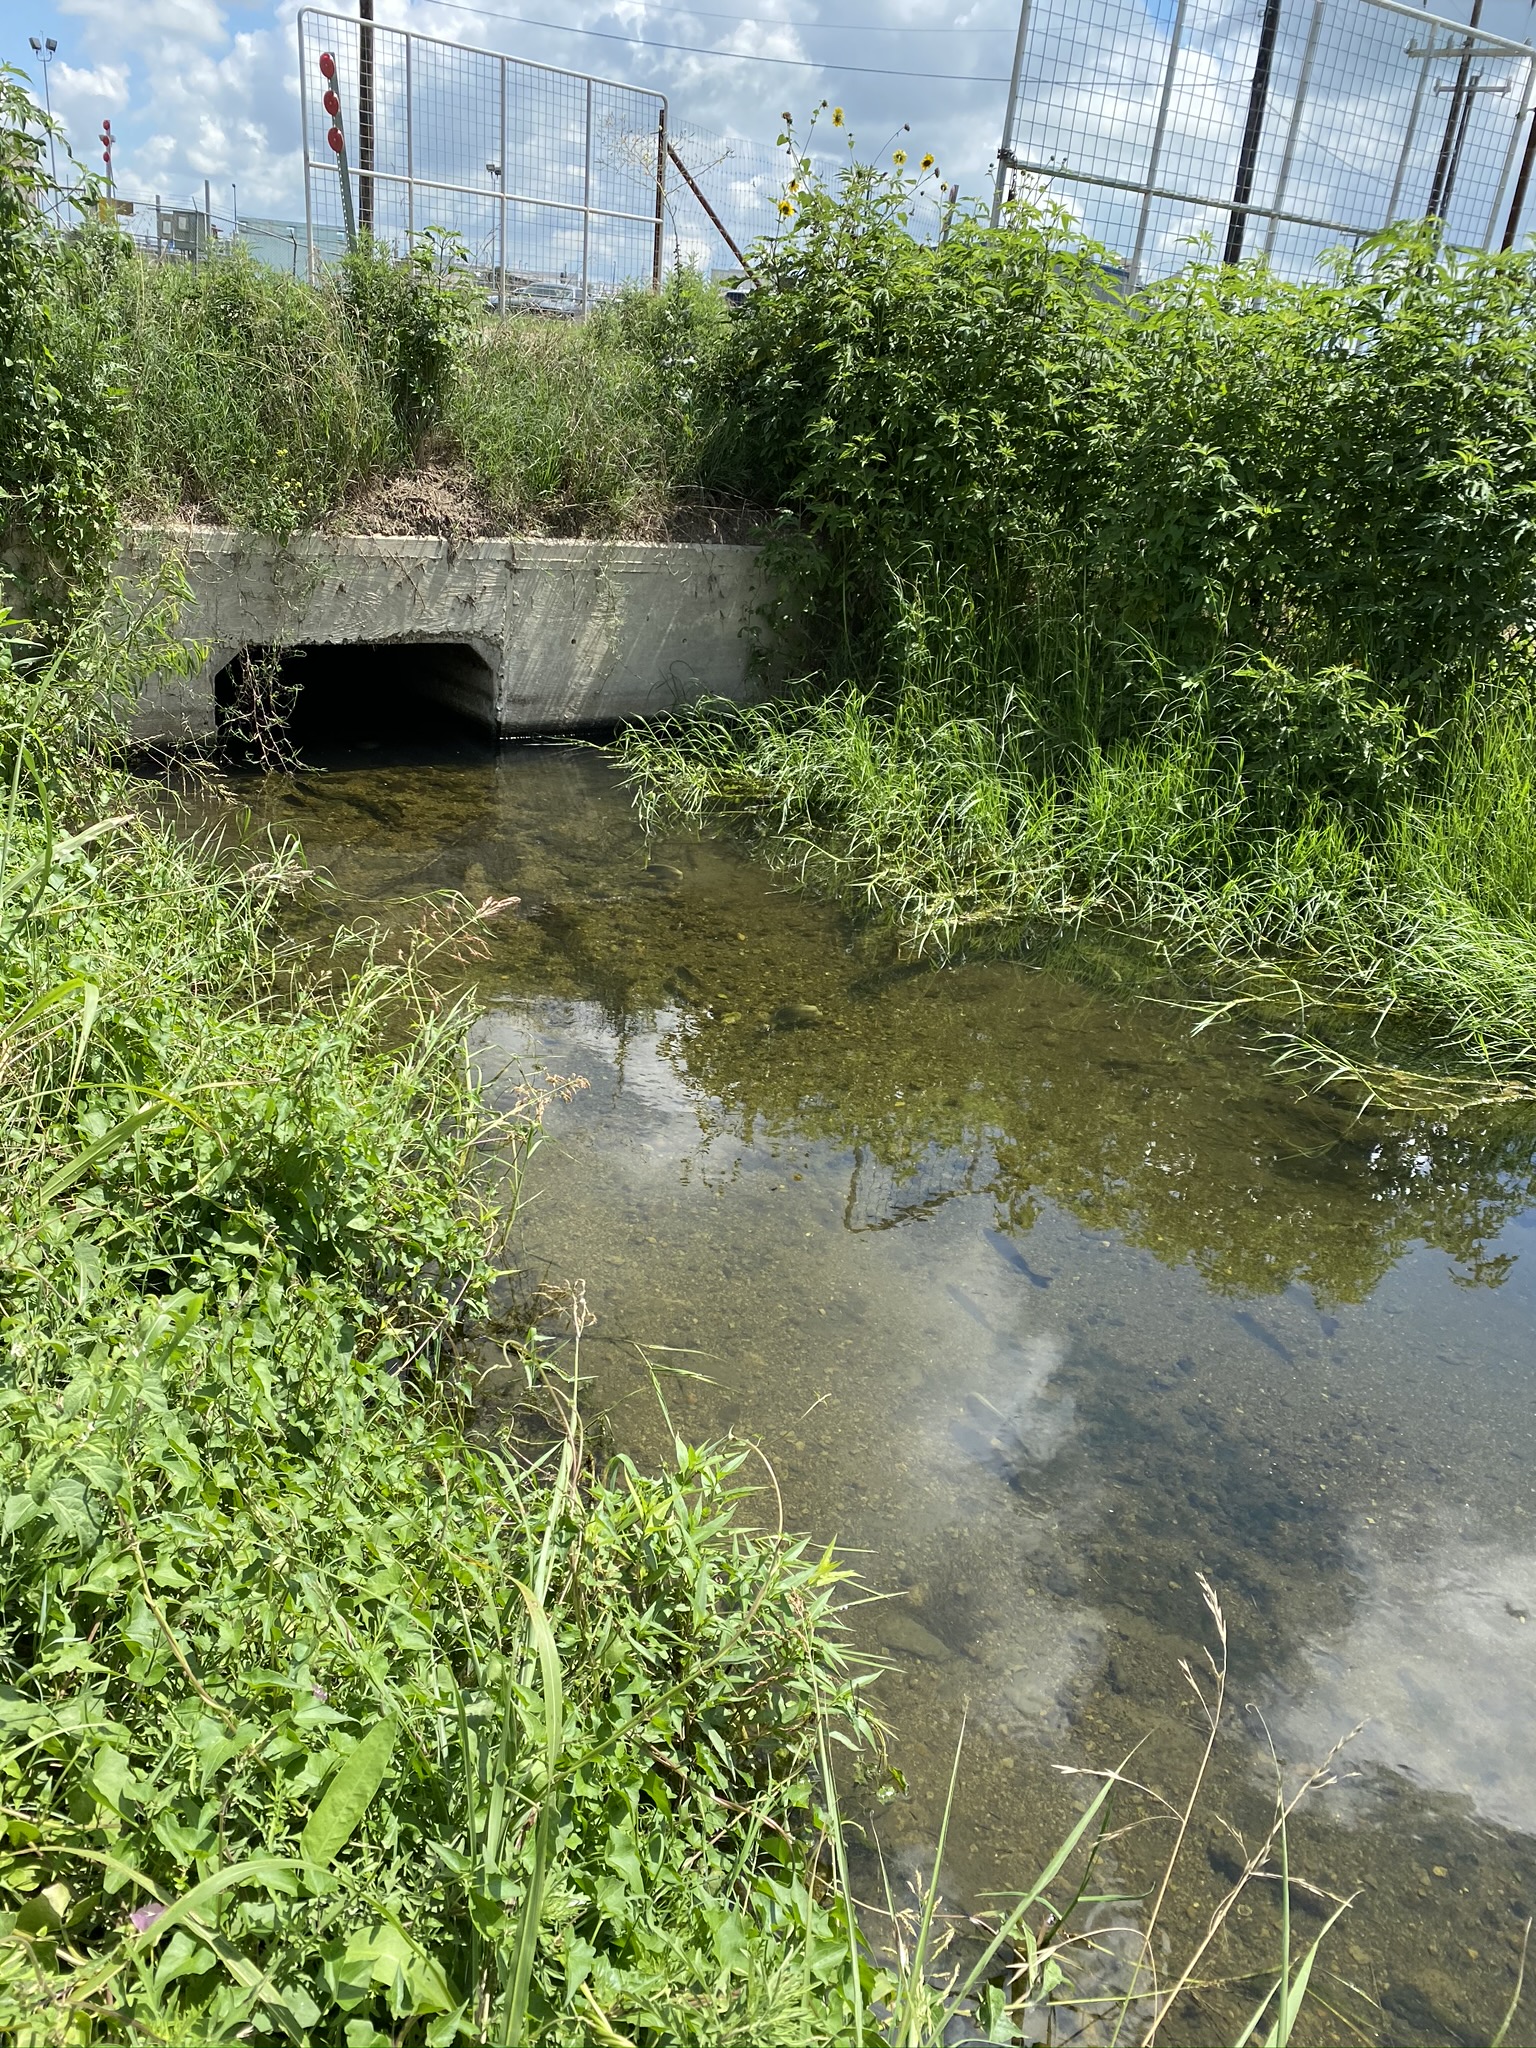 Fish surround the effluent discharged into creek